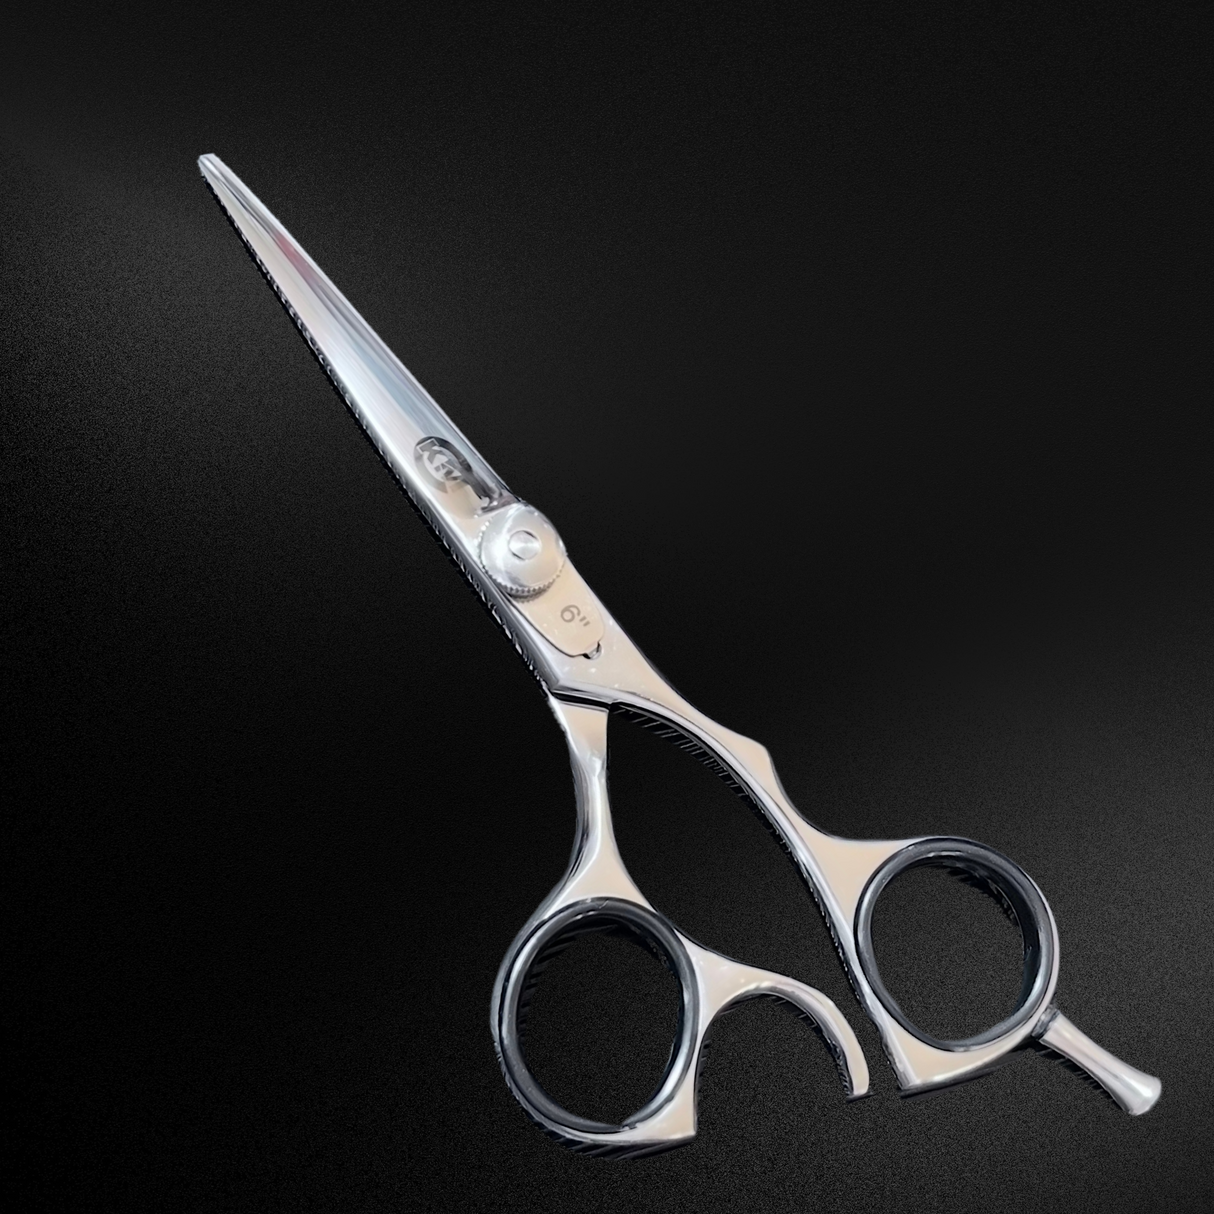 Km Professional Salon Quality Scissor - 6”inches